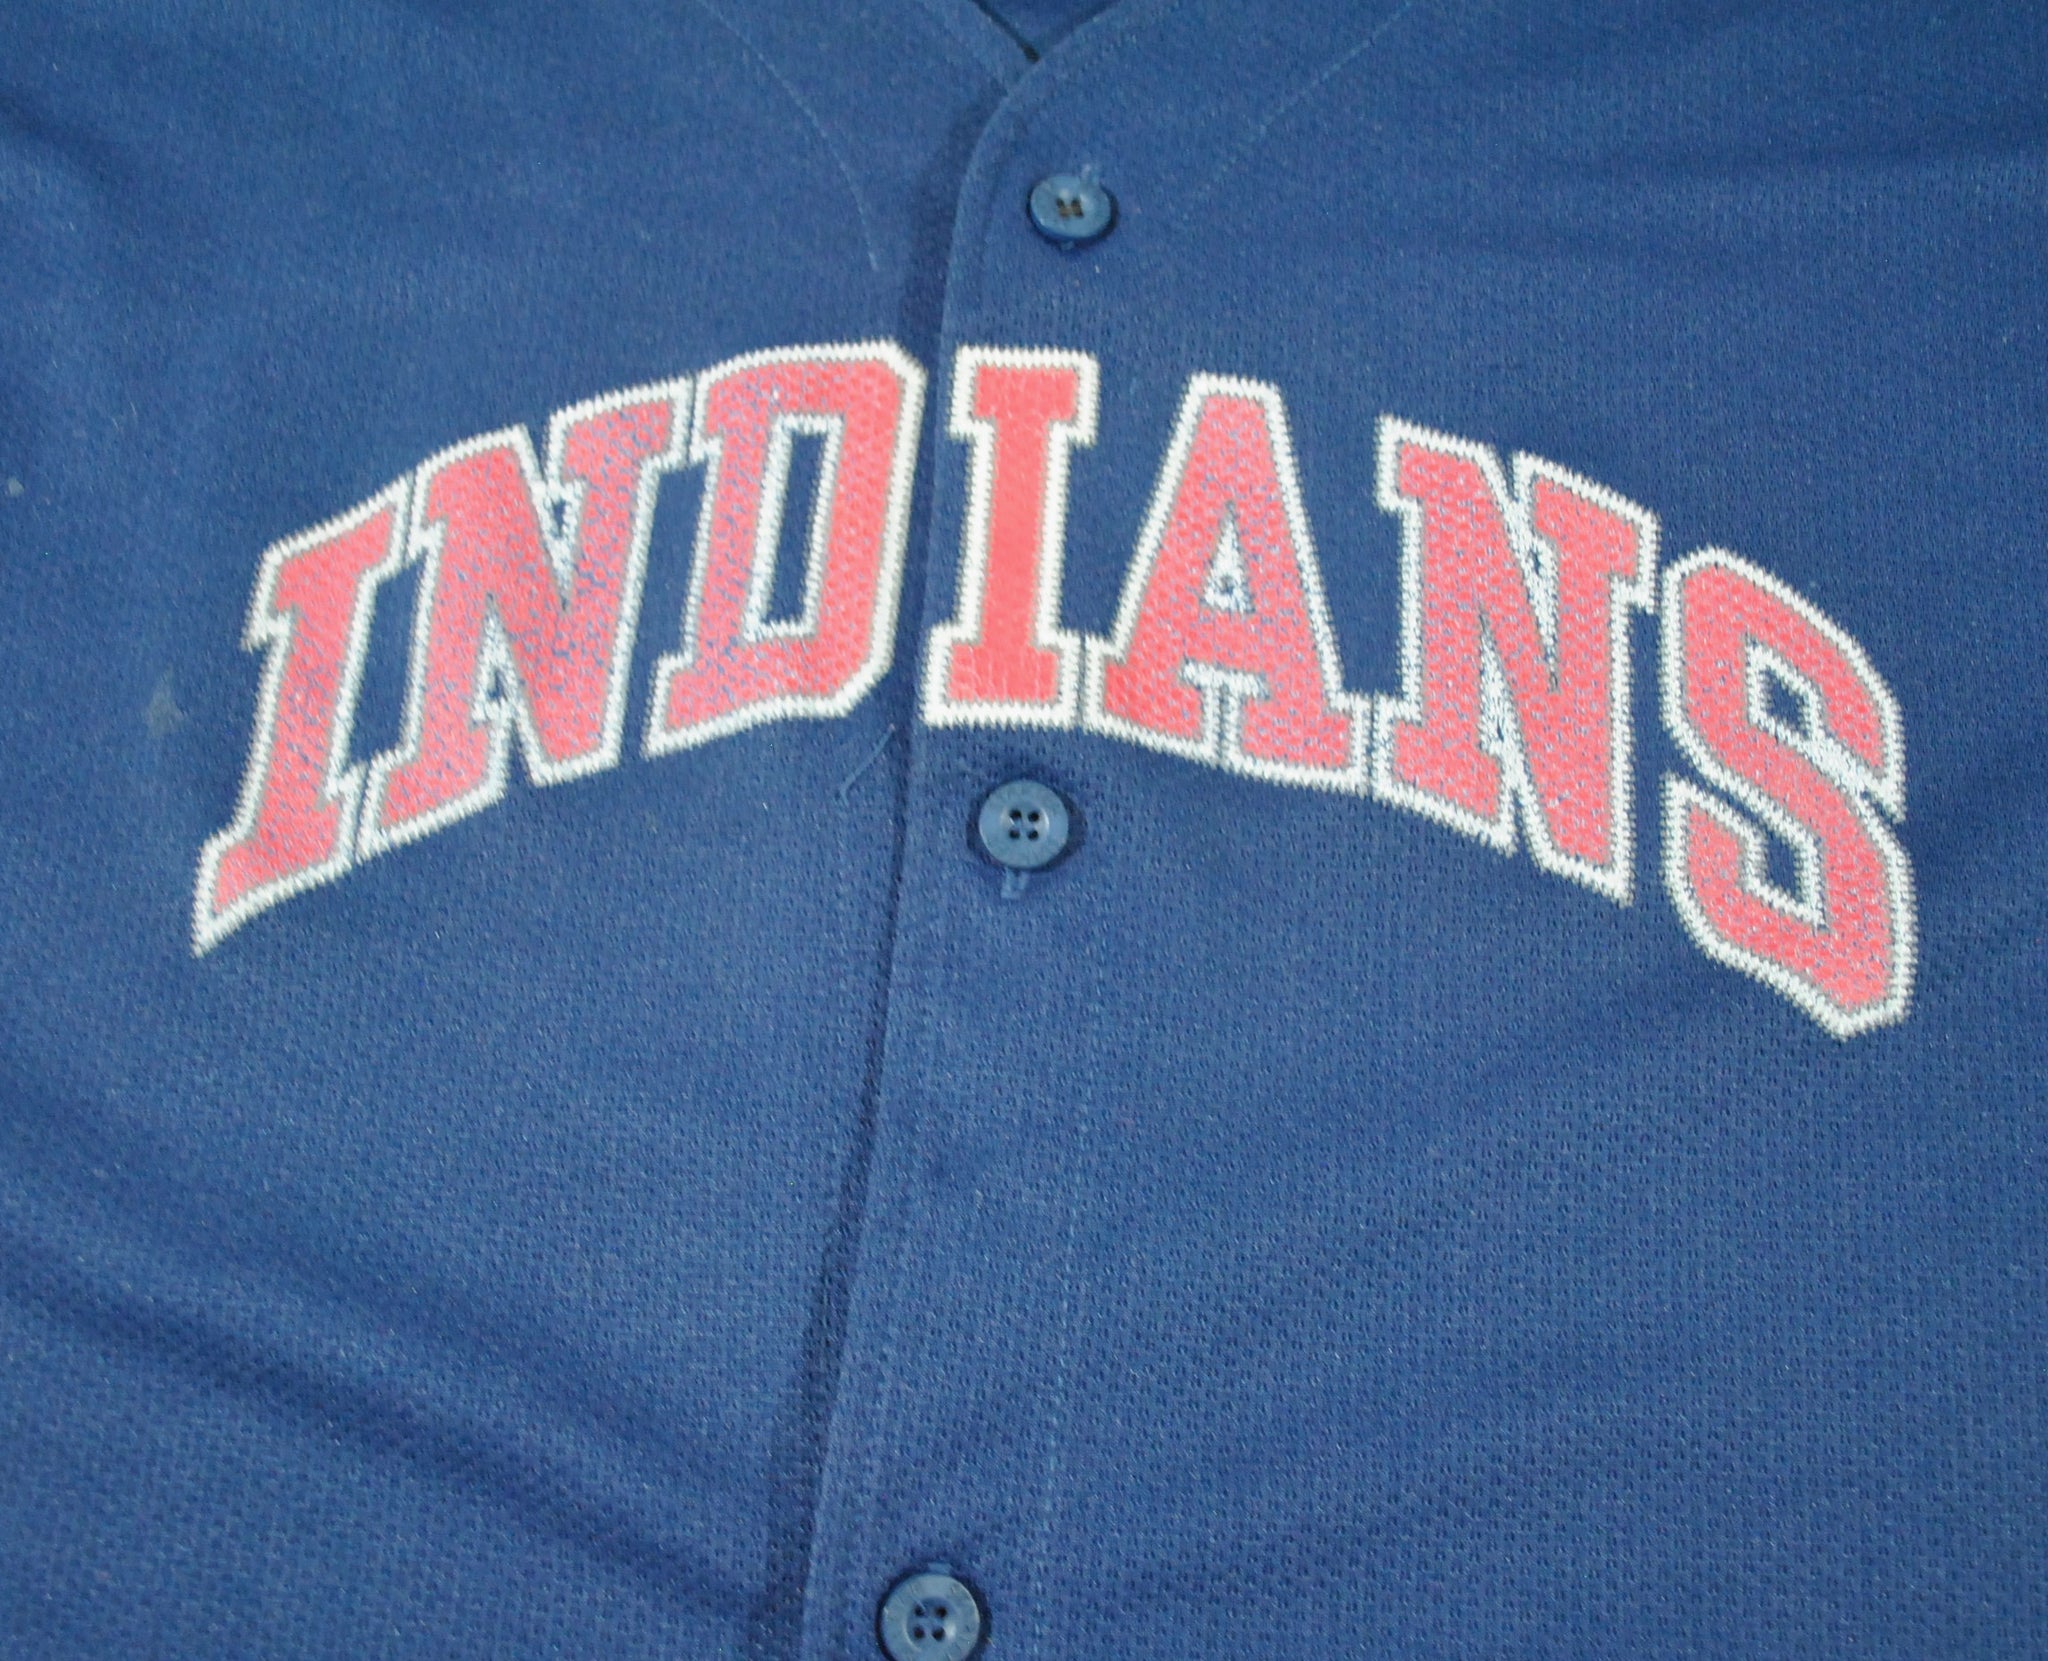 Vintage Cleveland Indians Kenny Lofton Jersey Size Large